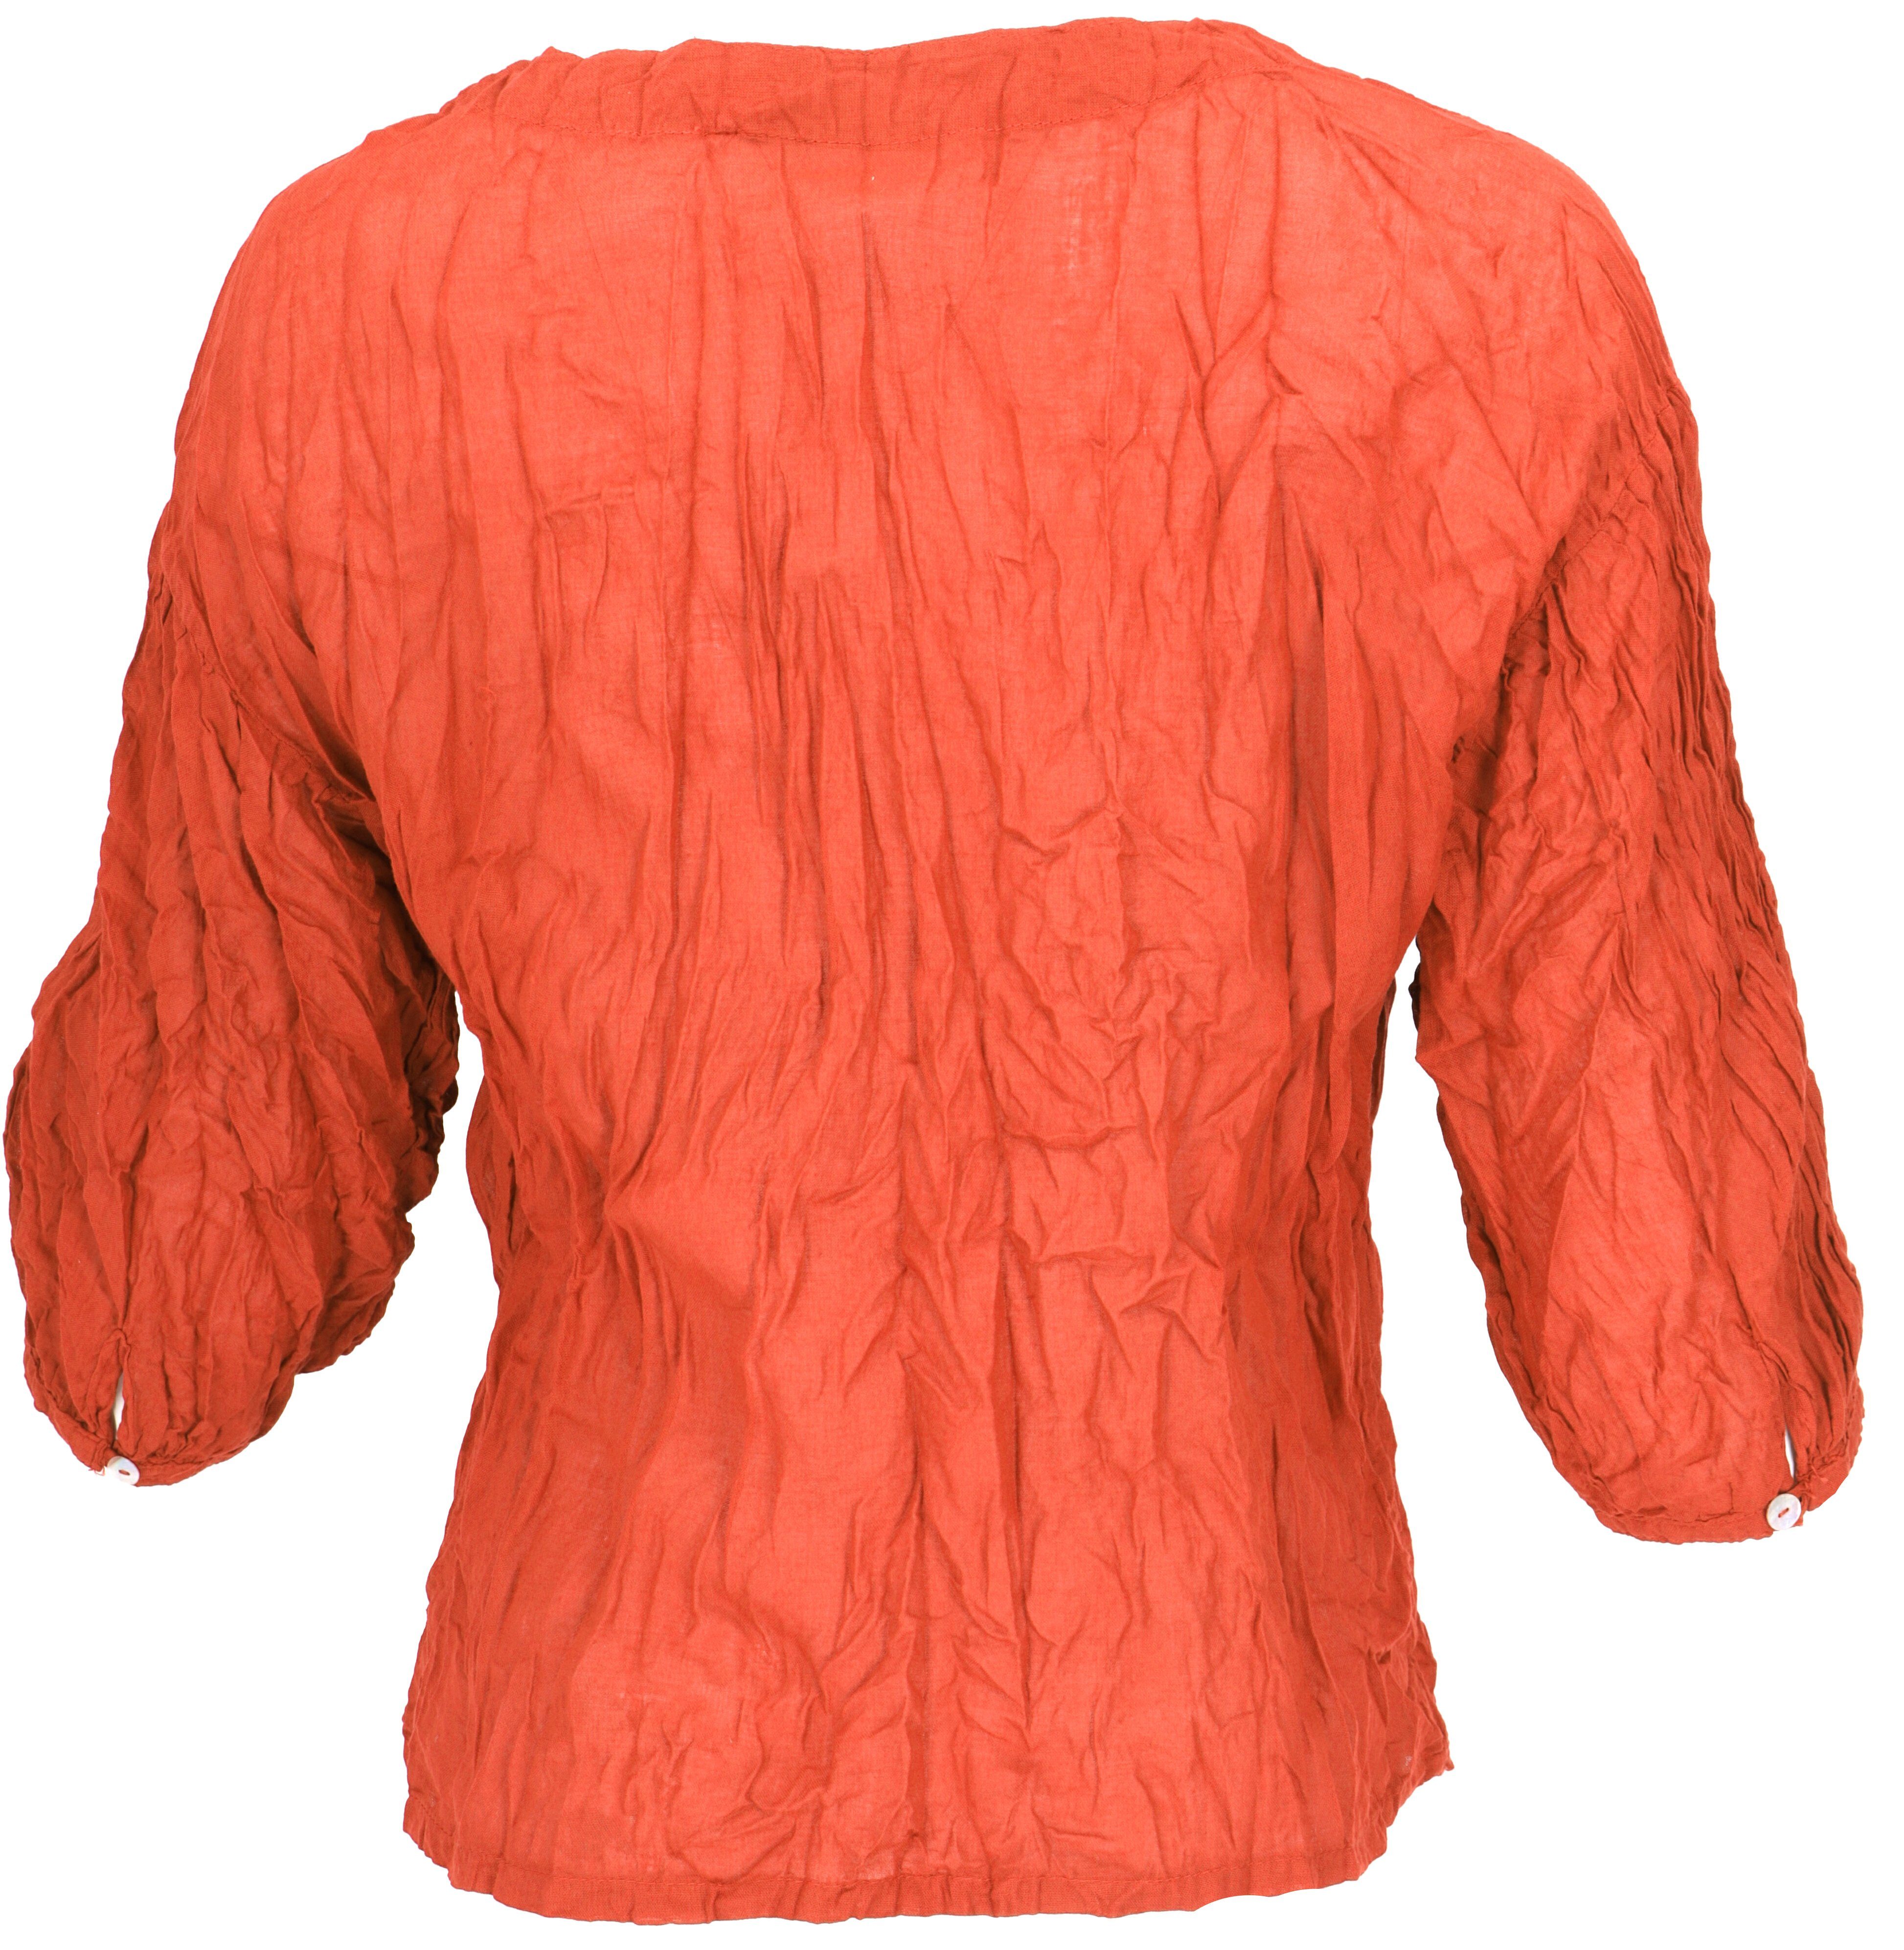 Crash orange alternative Bekleidung Longbluse Blusenshirt, Boho Blusentop.. Krinkelbluse, Guru-Shop